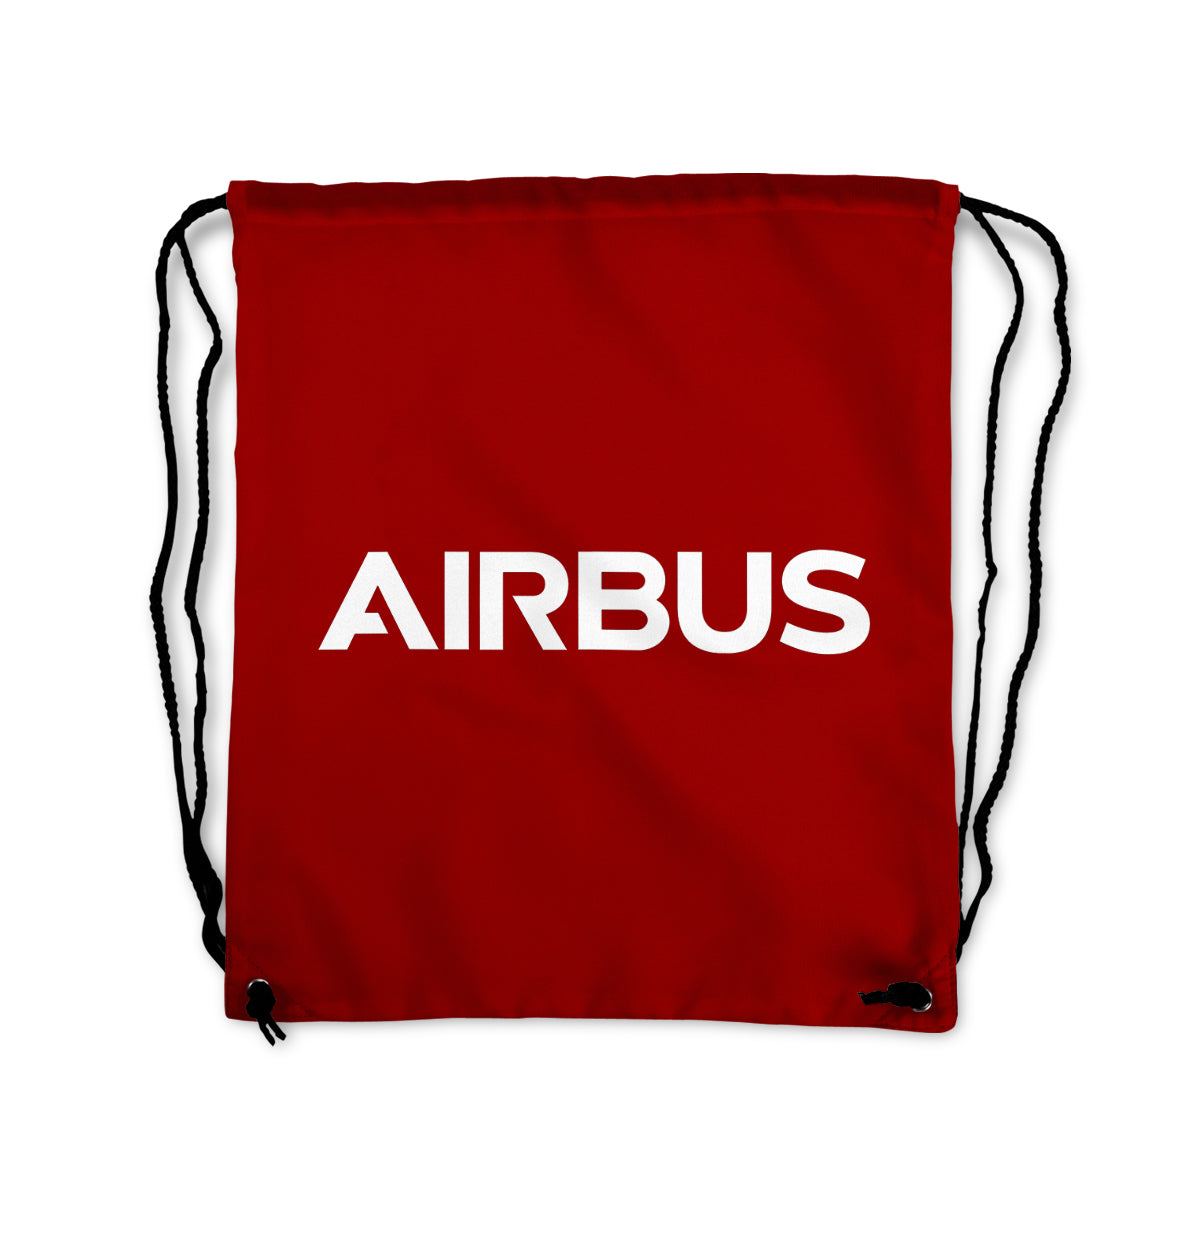 Airbus & Text Designed Drawstring Bags